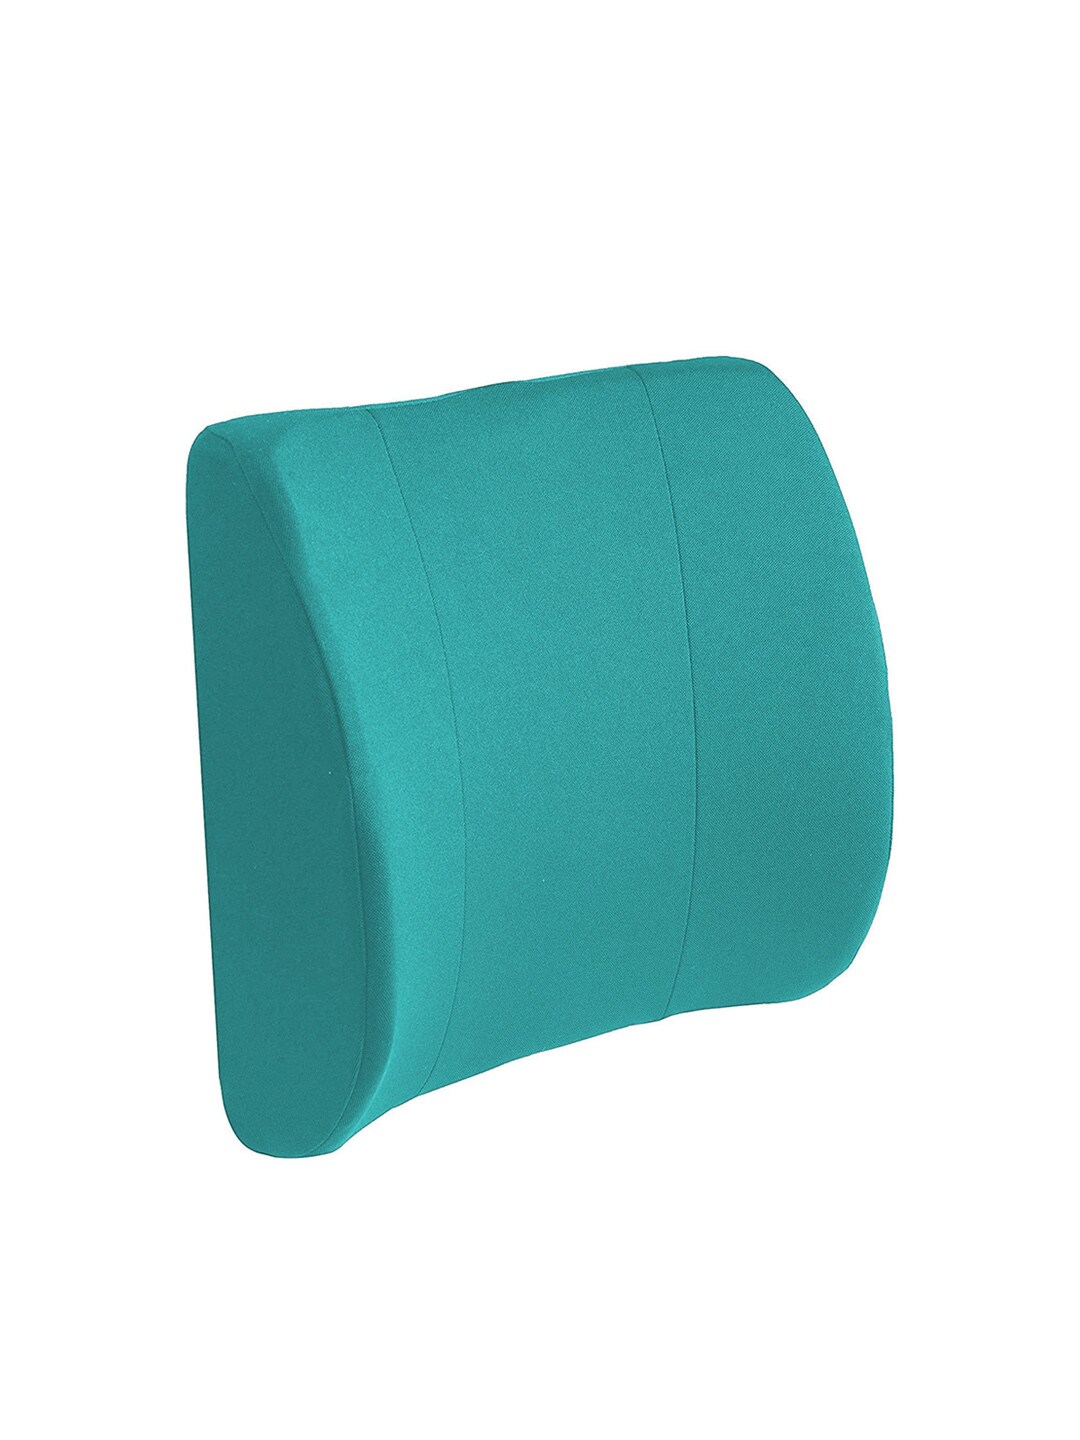 Pum Pum Sky-Blue Solid Memory Foam Therapedic Backrest Lumbar Pillow Price in India